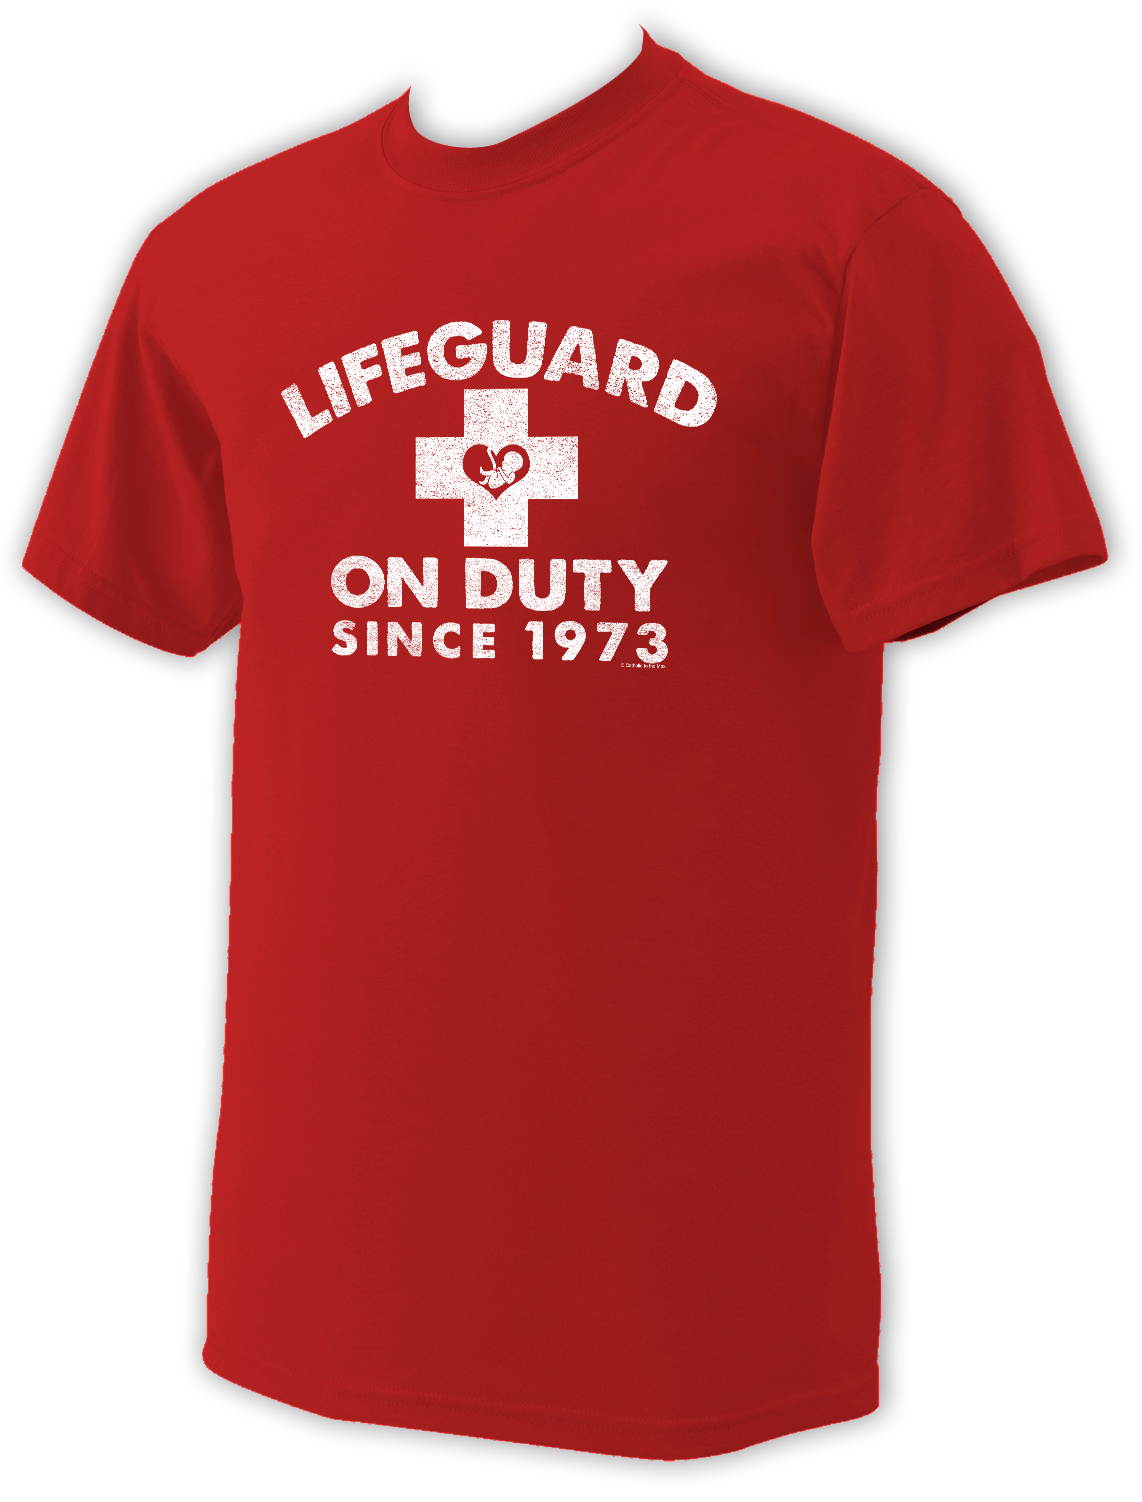 Lifeguard on Duty T-shirt